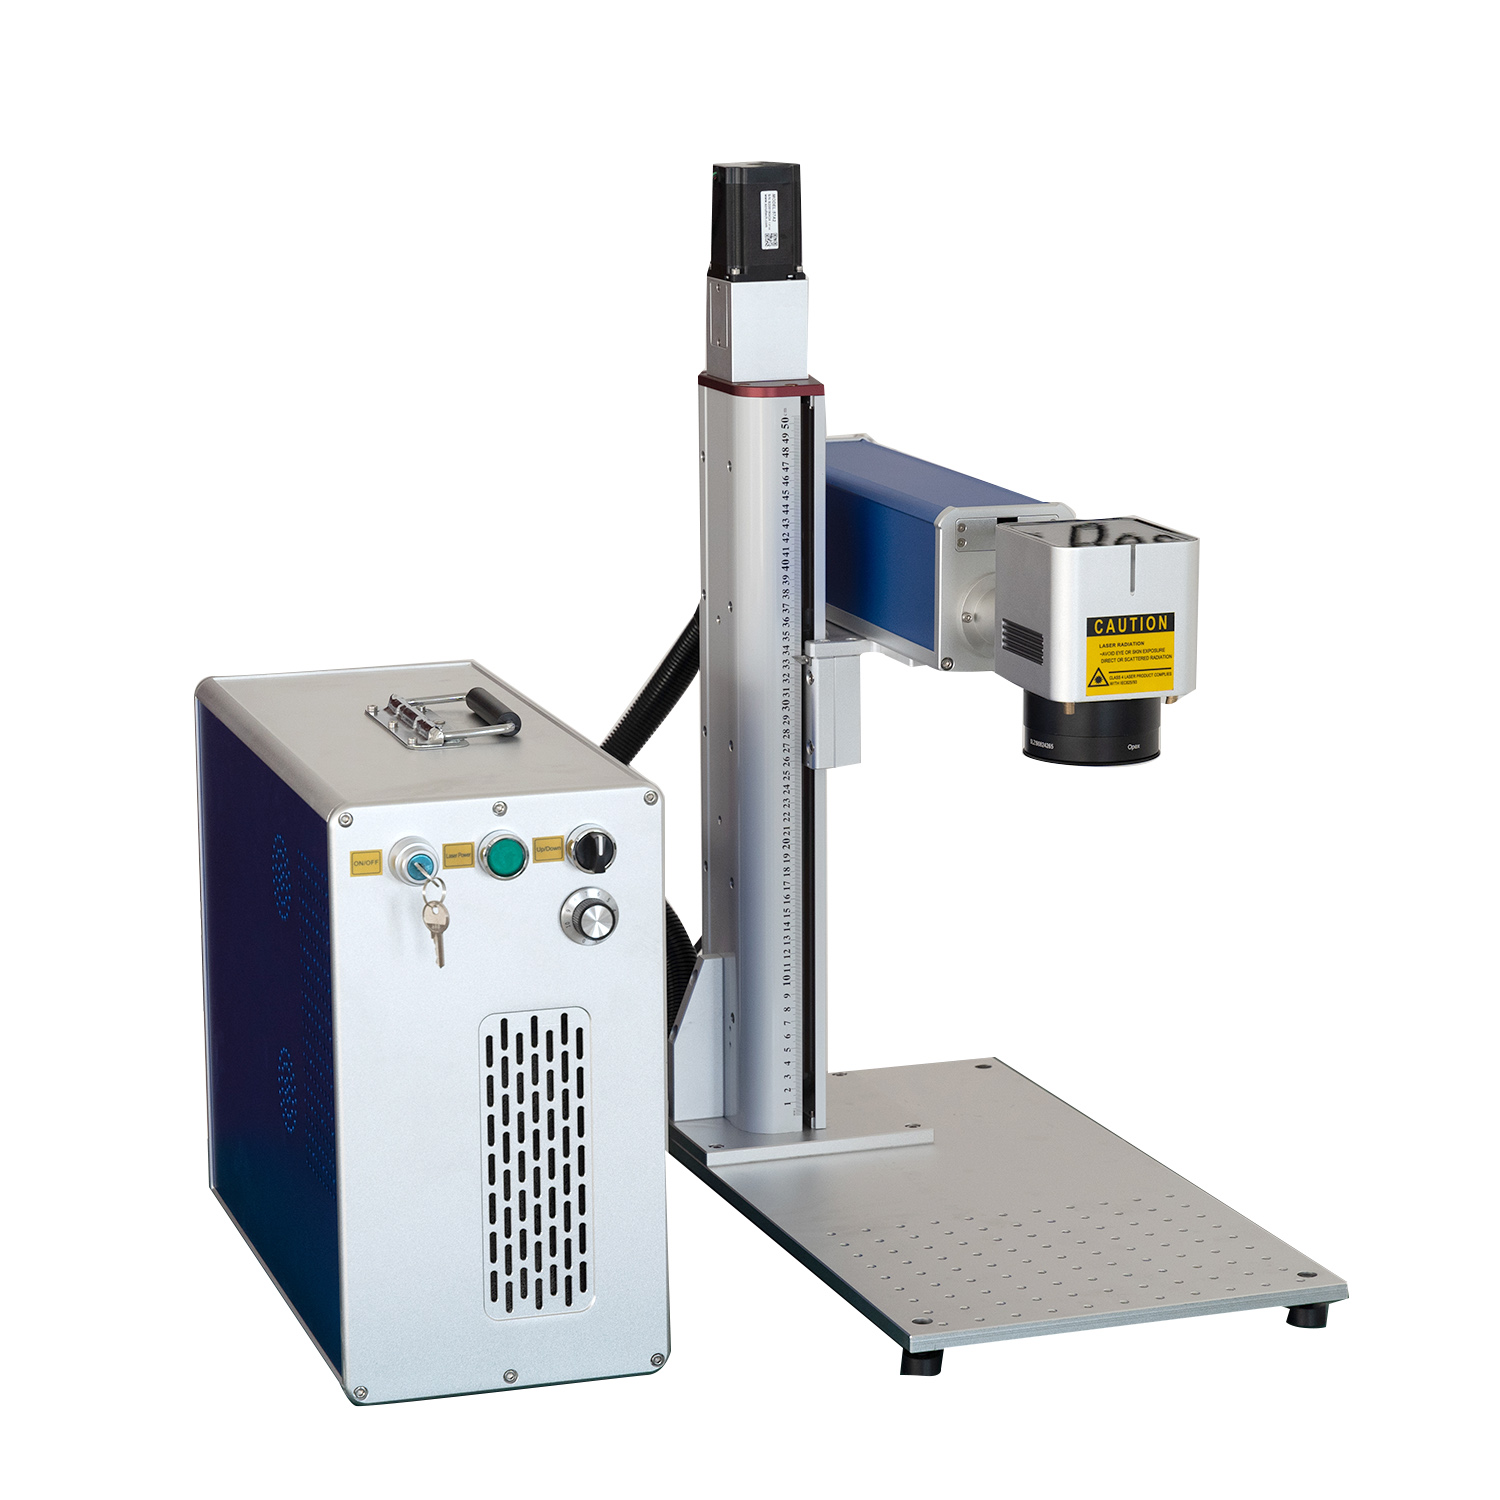 JPT MOPA M8 100W Fiber Laser Marking Machine for Glass Drilling Cutting Engraving